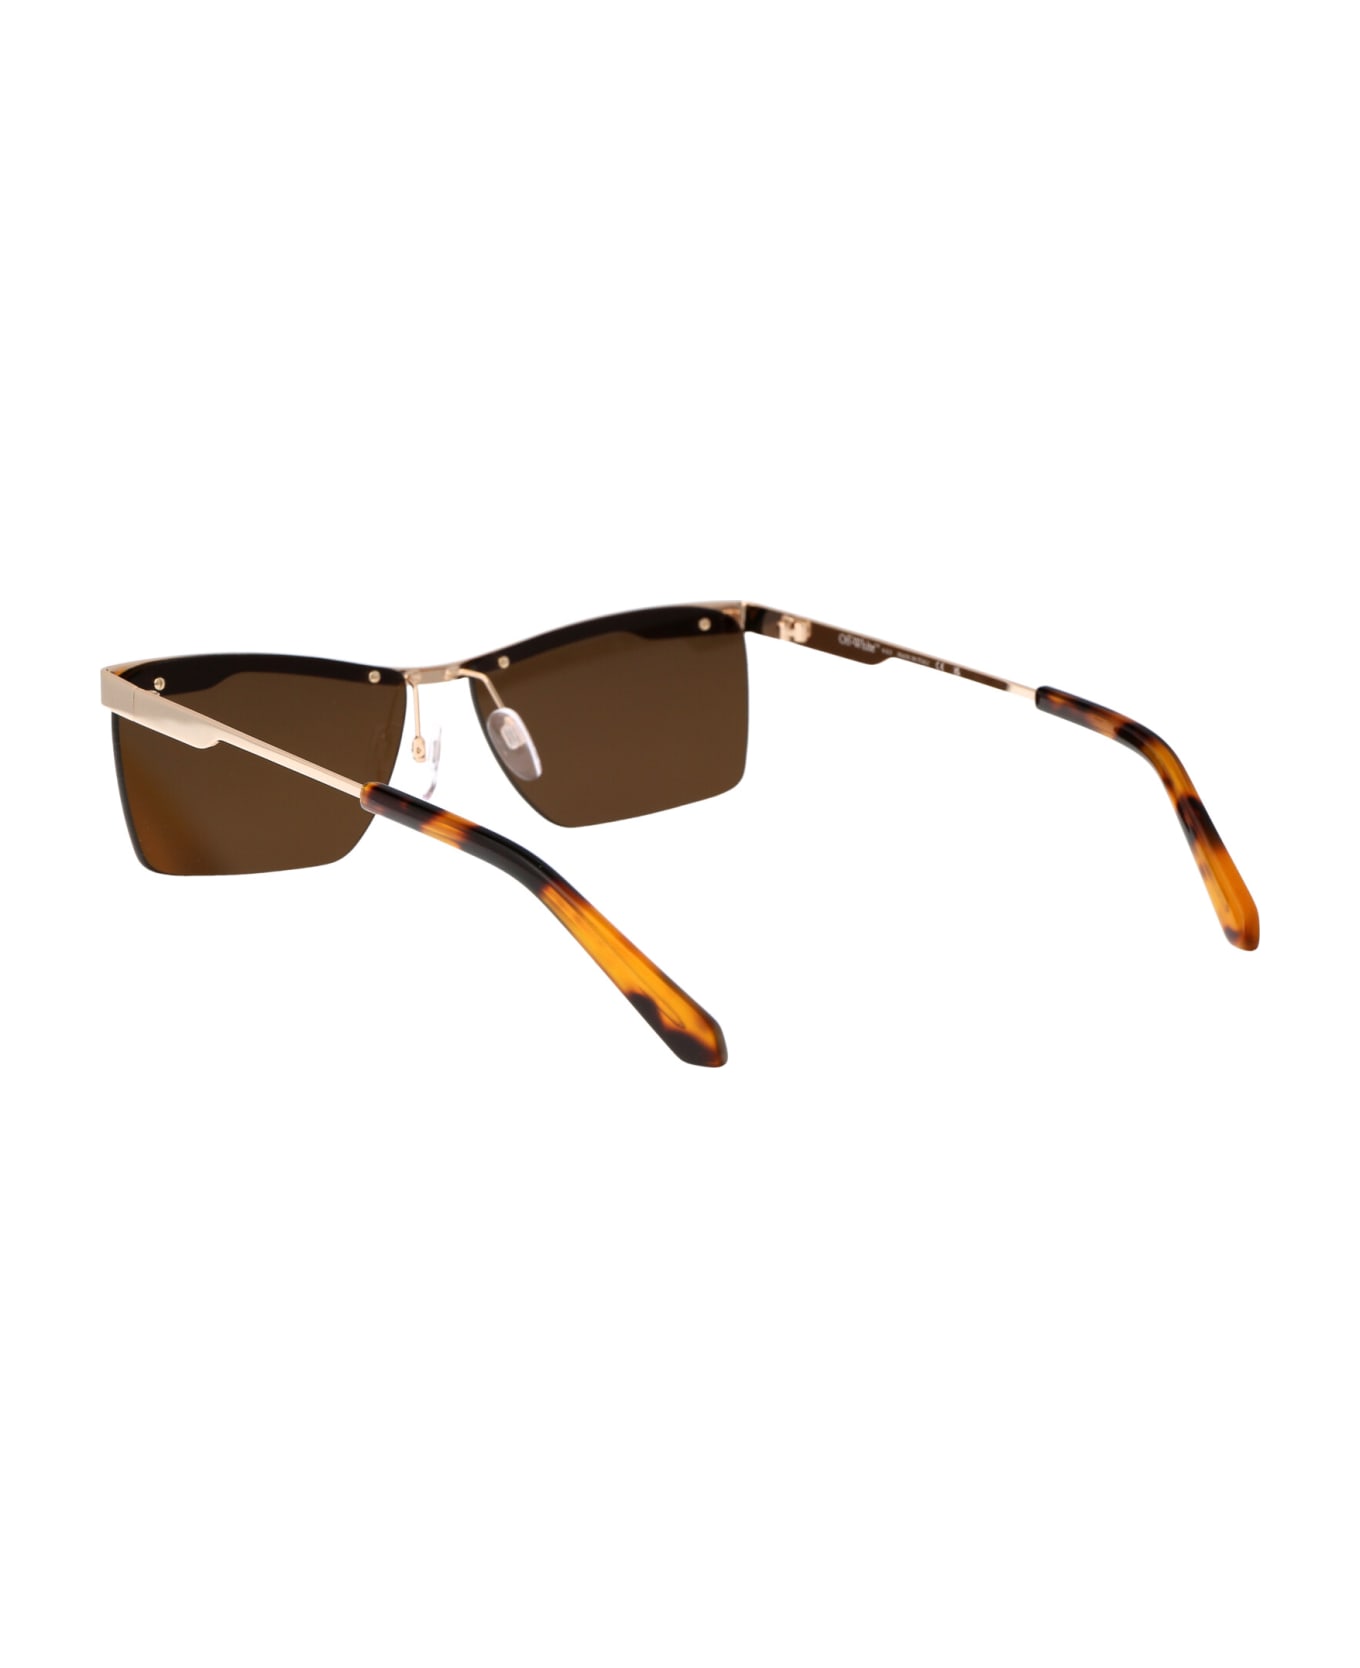 Off-White Rimini Sunglasses - 7676 GOLD